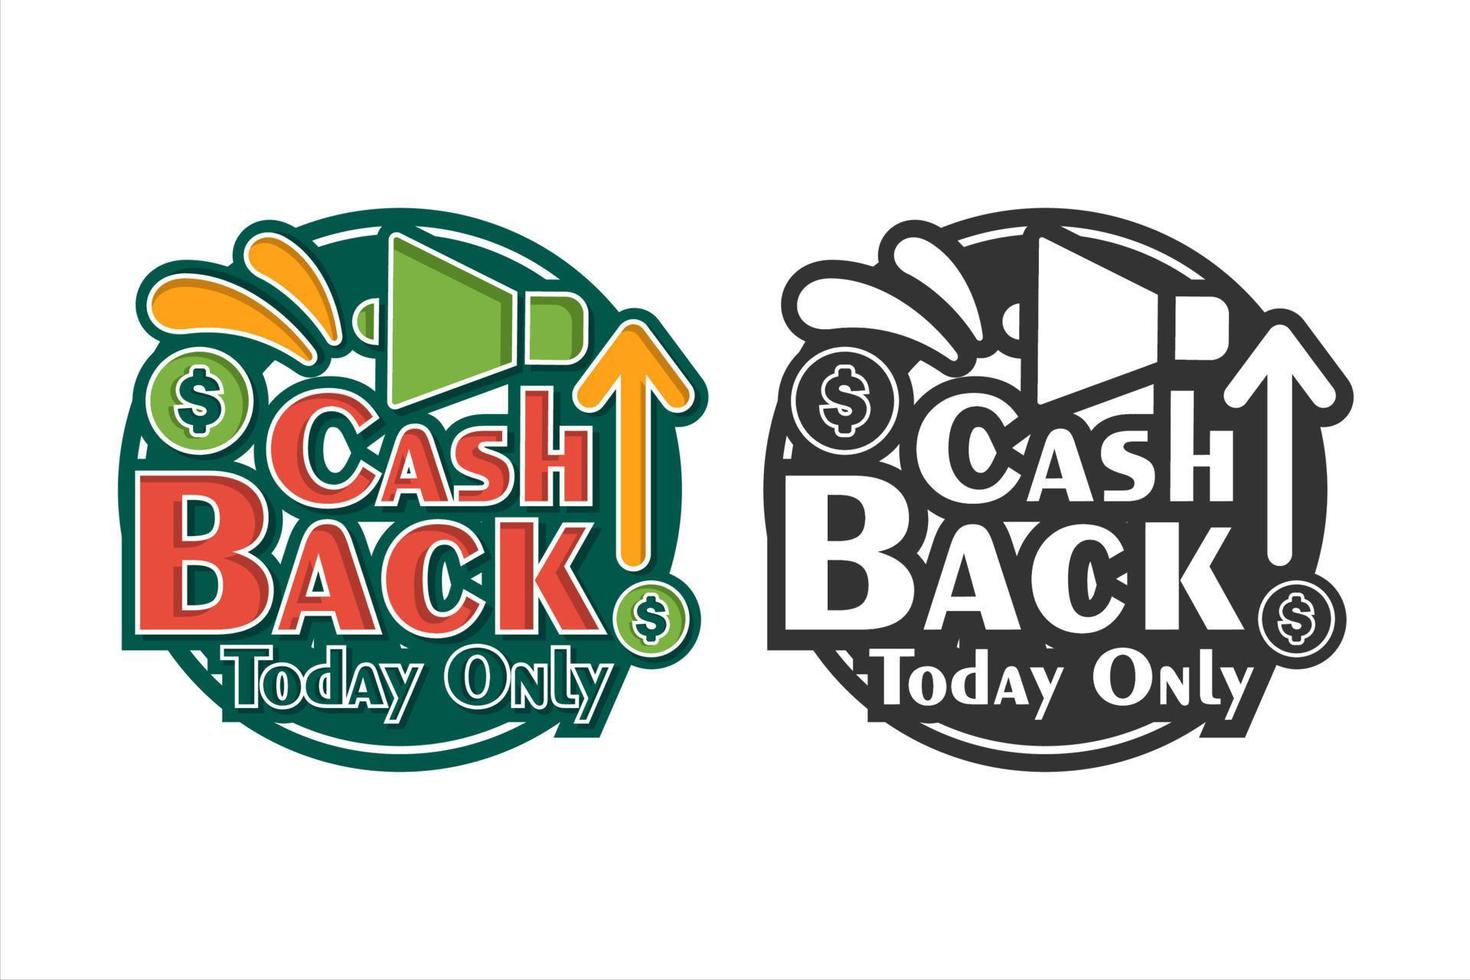 Cash back only today premium design vector